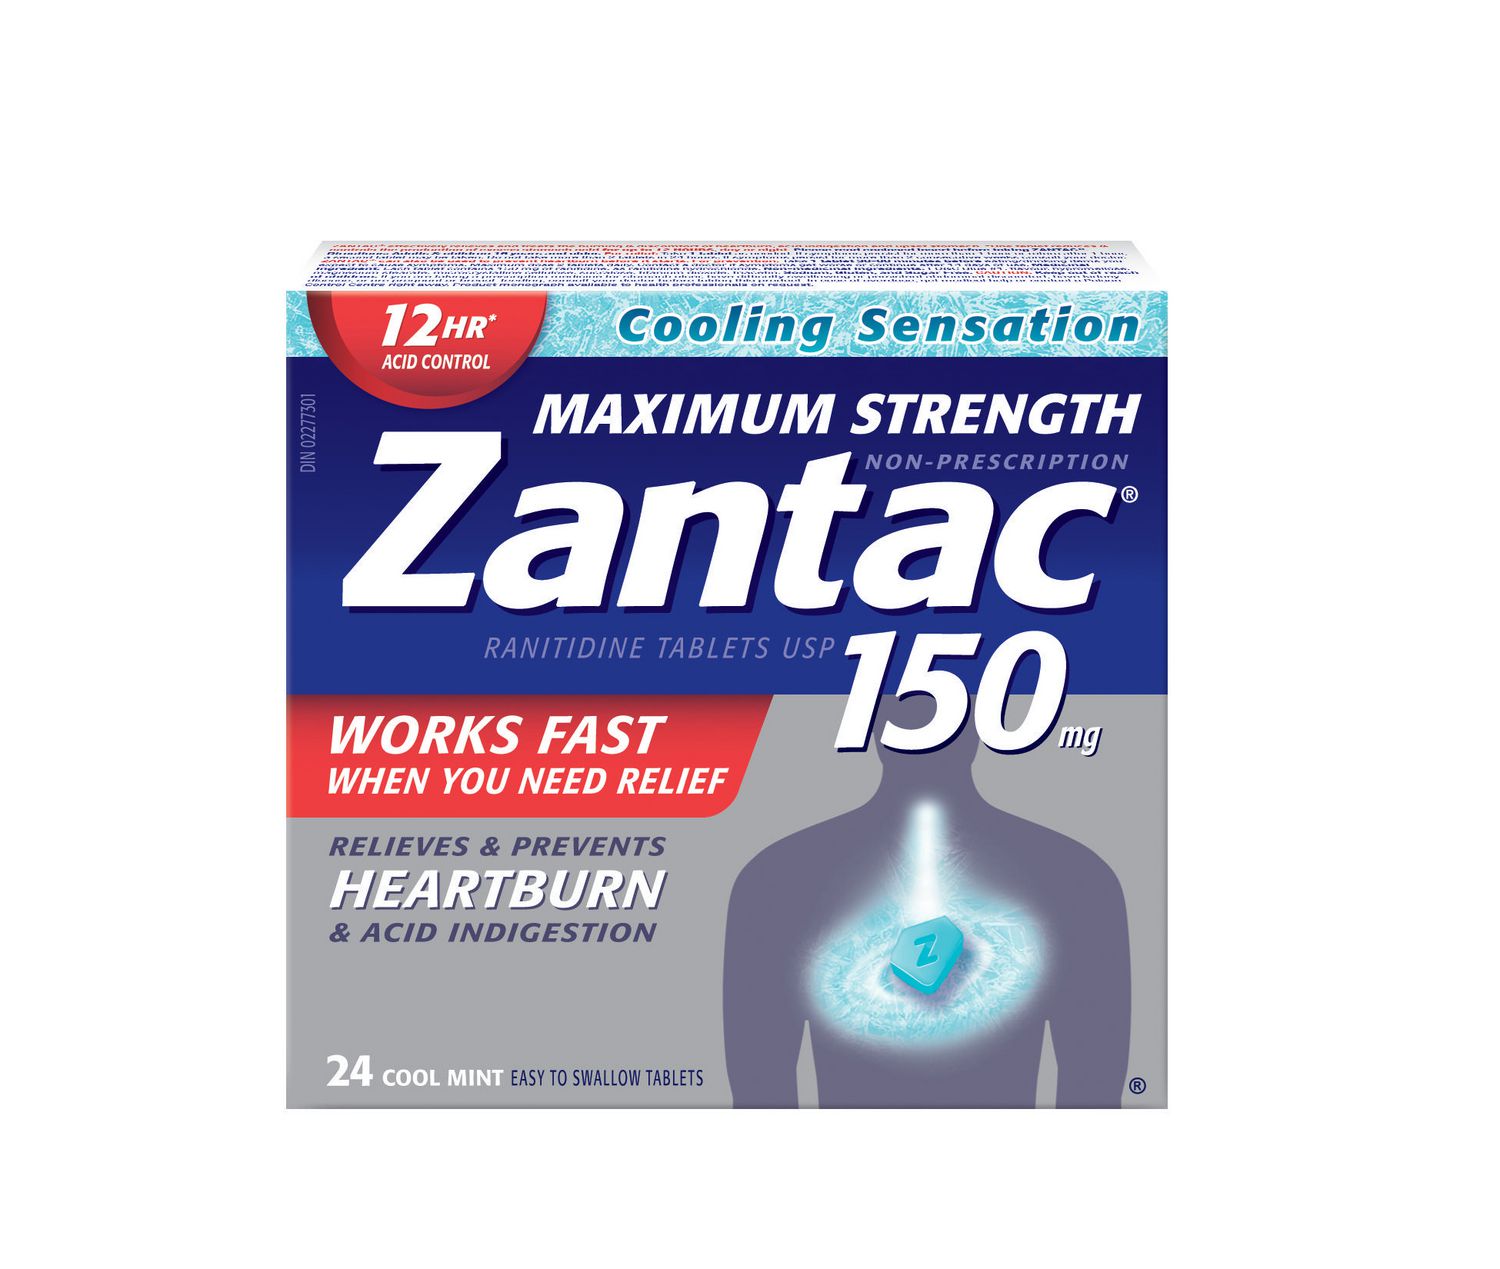 zantac-150-maximum-strength-cool-mint-walmart-canada